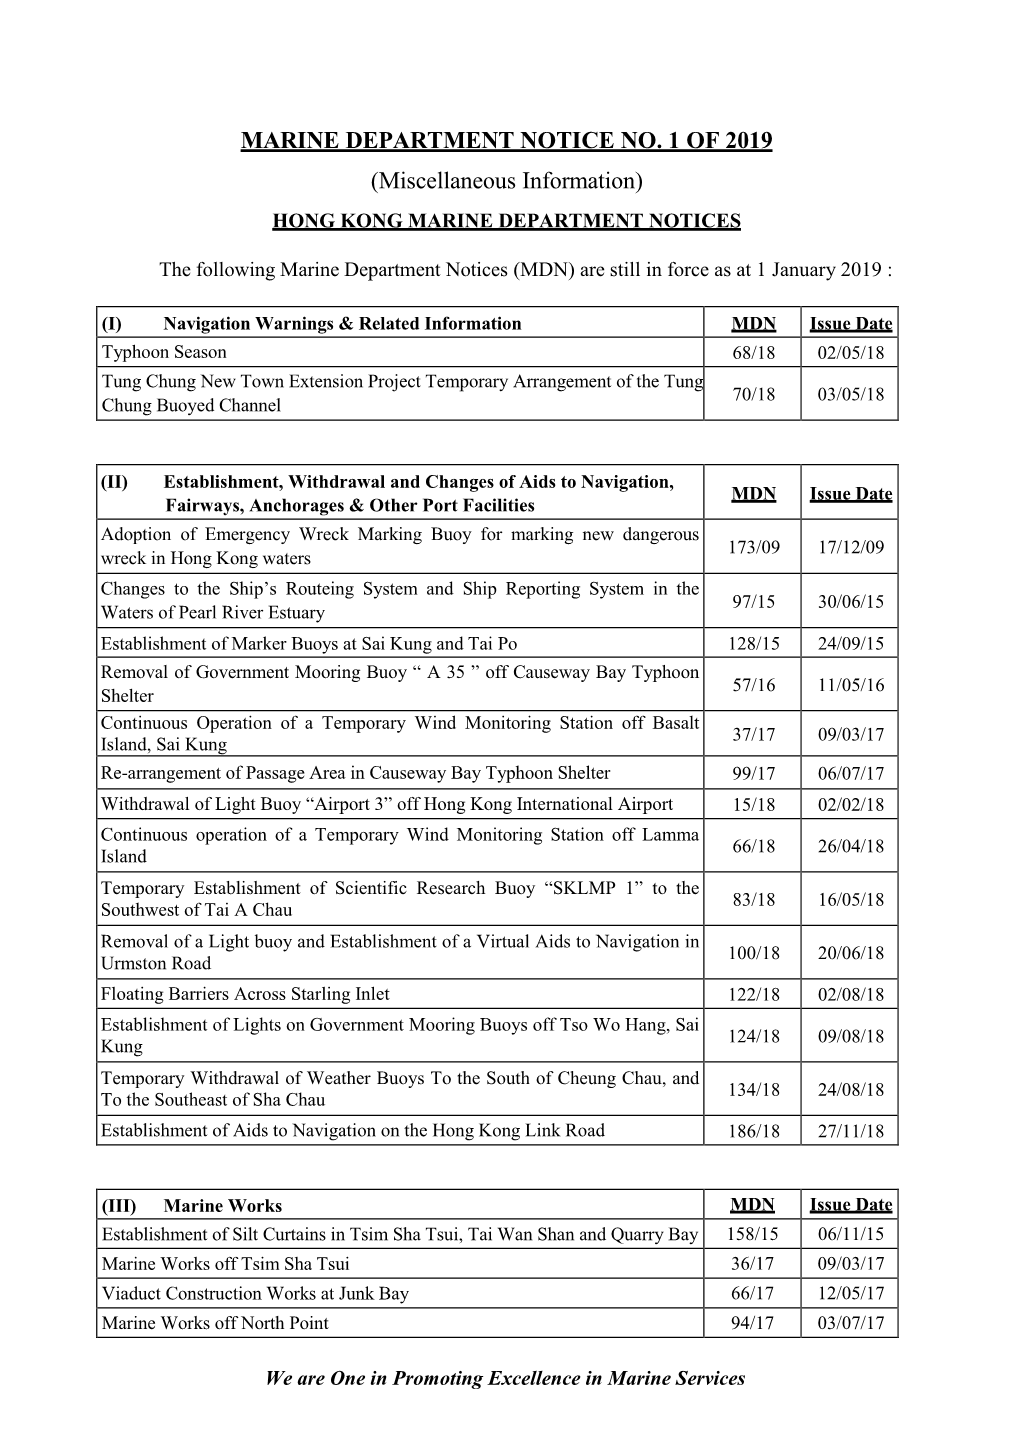 MARINE DEPARTMENT NOTICE NO. 1 of 2019 (Miscellaneous Information) HONG KONG MARINE DEPARTMENT NOTICES